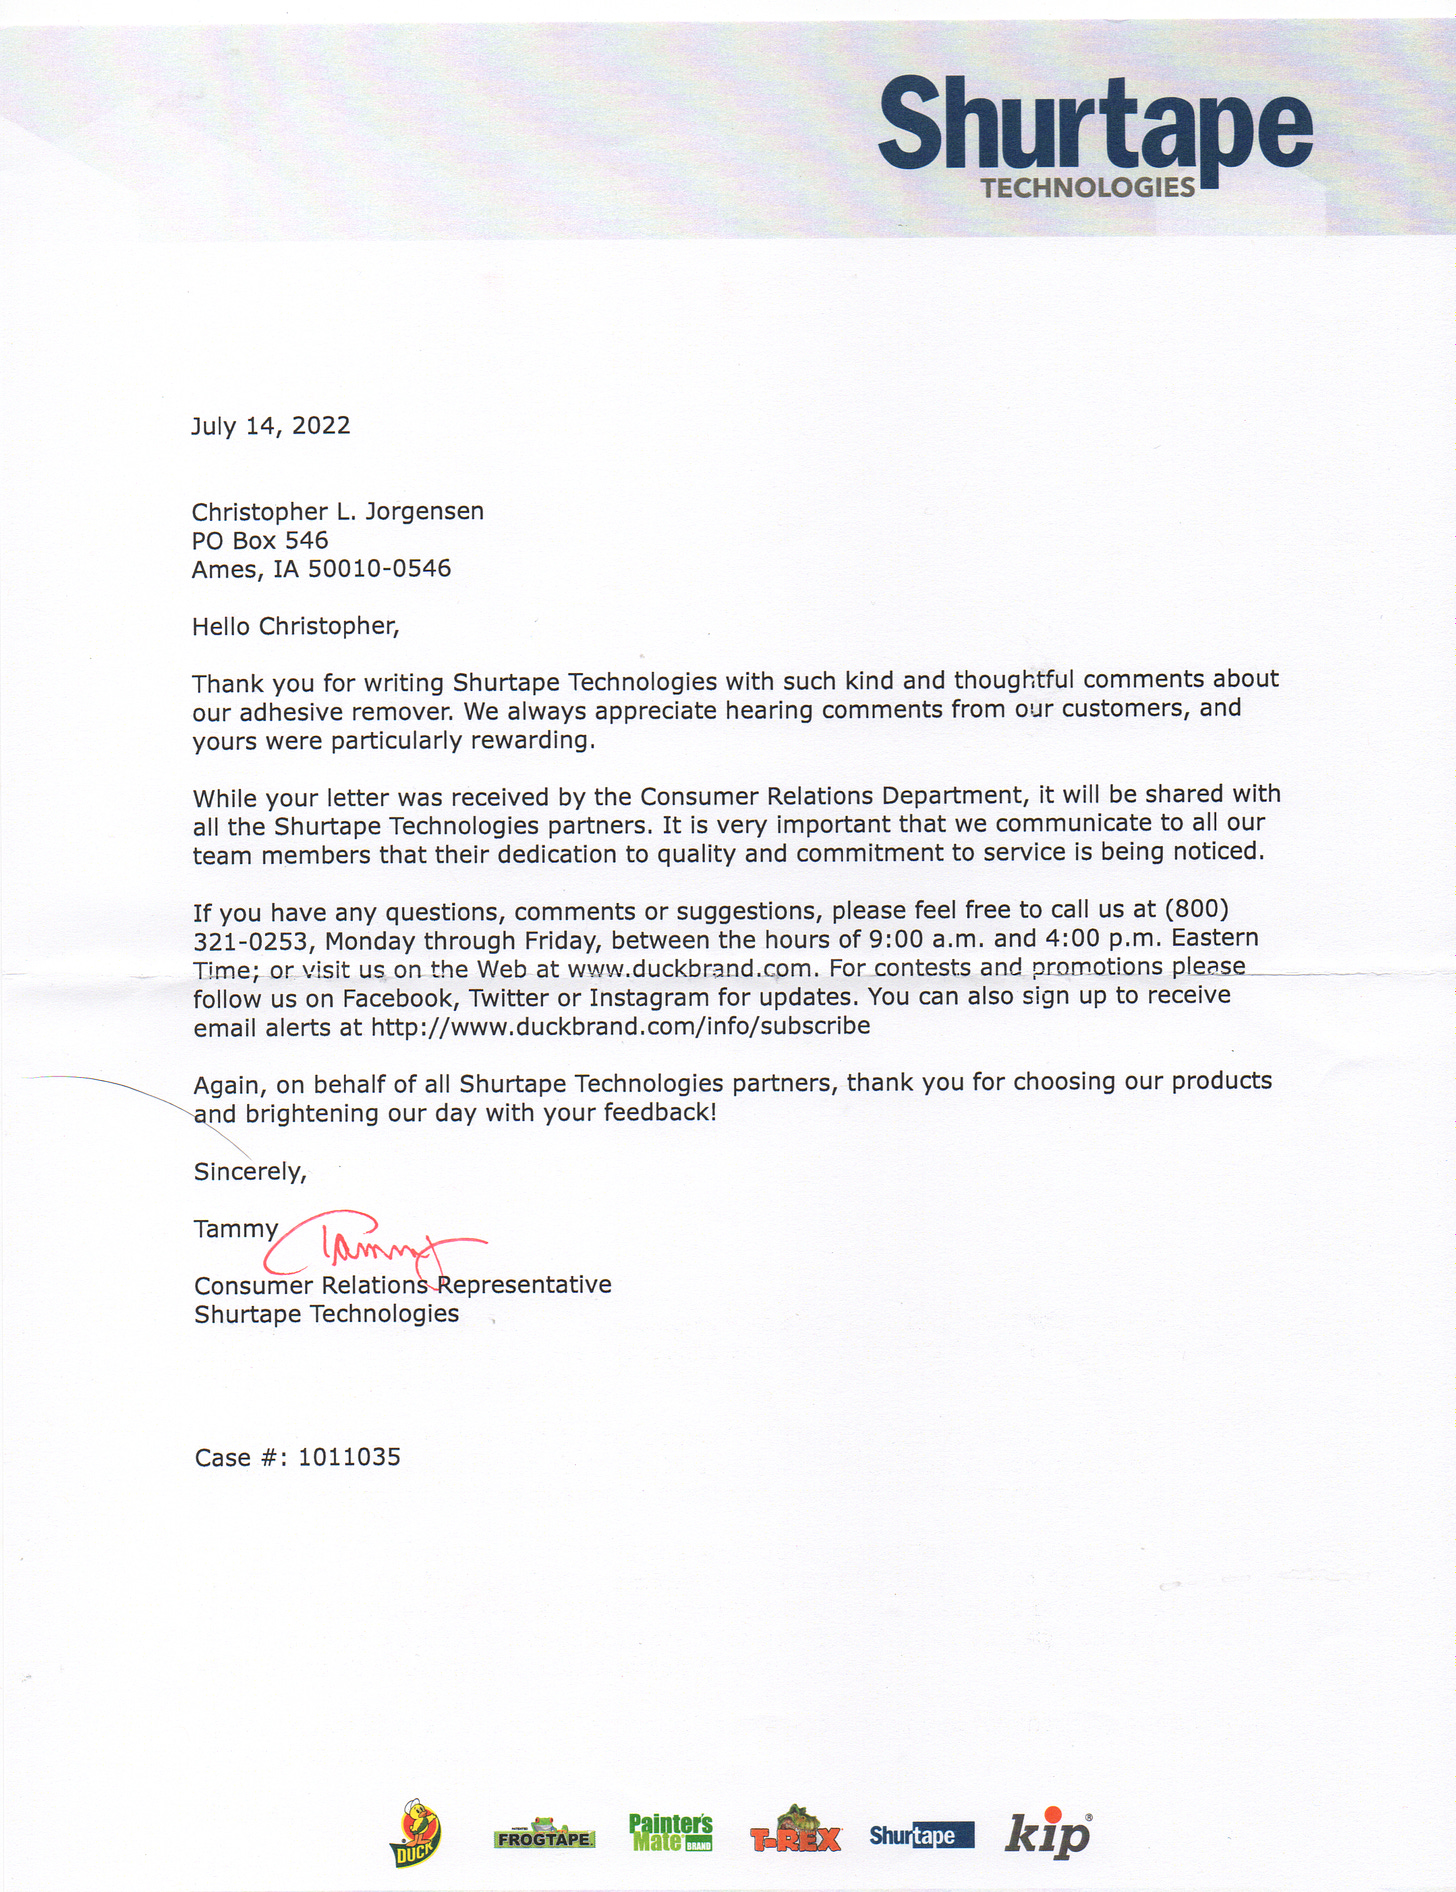 Scan of the letter from Shurtape. Transcript follows.